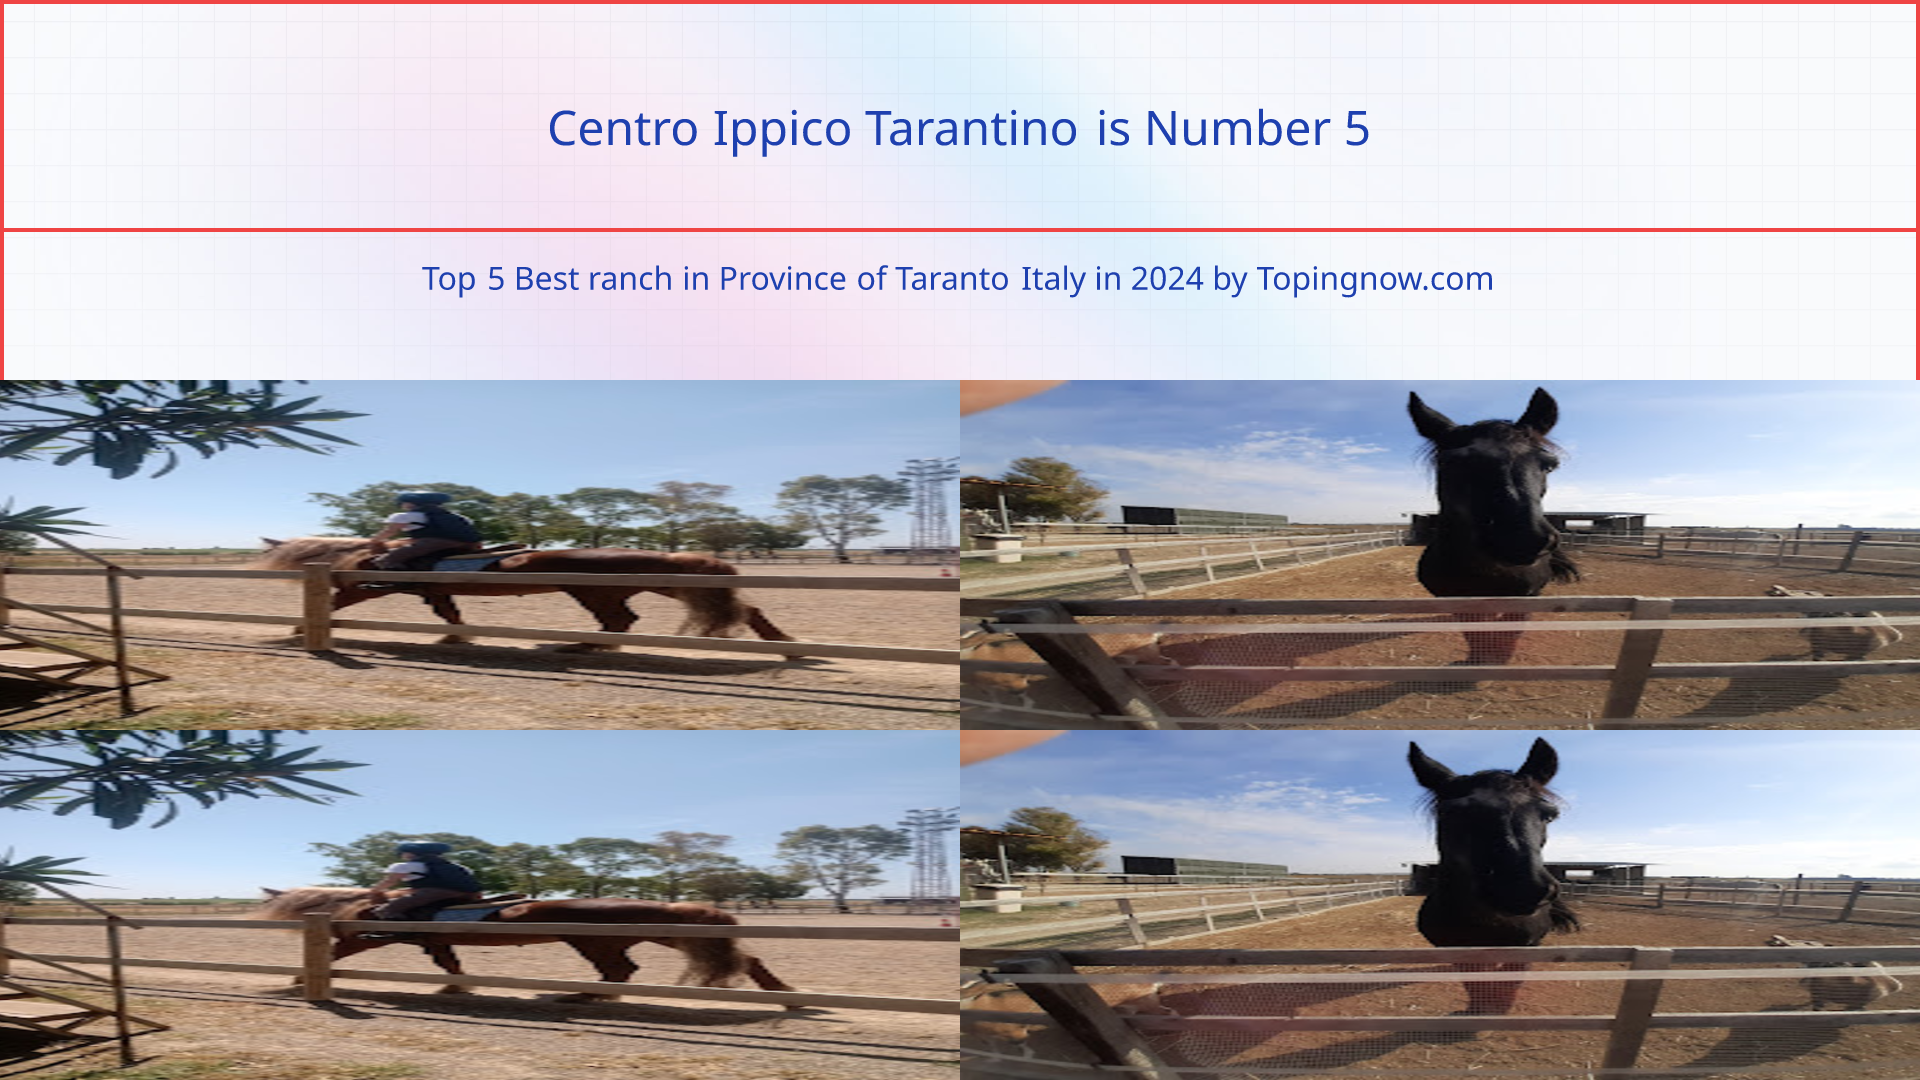 Centro Ippico Tarantino: Top 5 Best ranch in Province of Taranto Italy in 2024